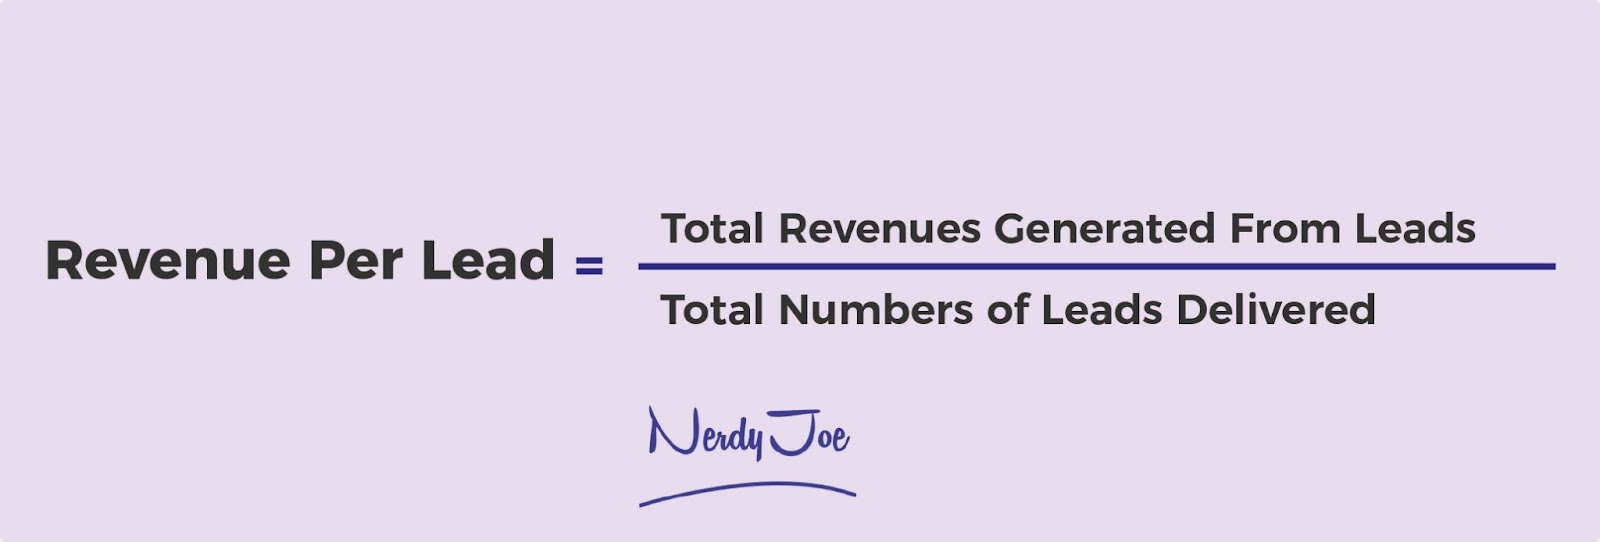 Revenue per lead formula for lead generation strategies